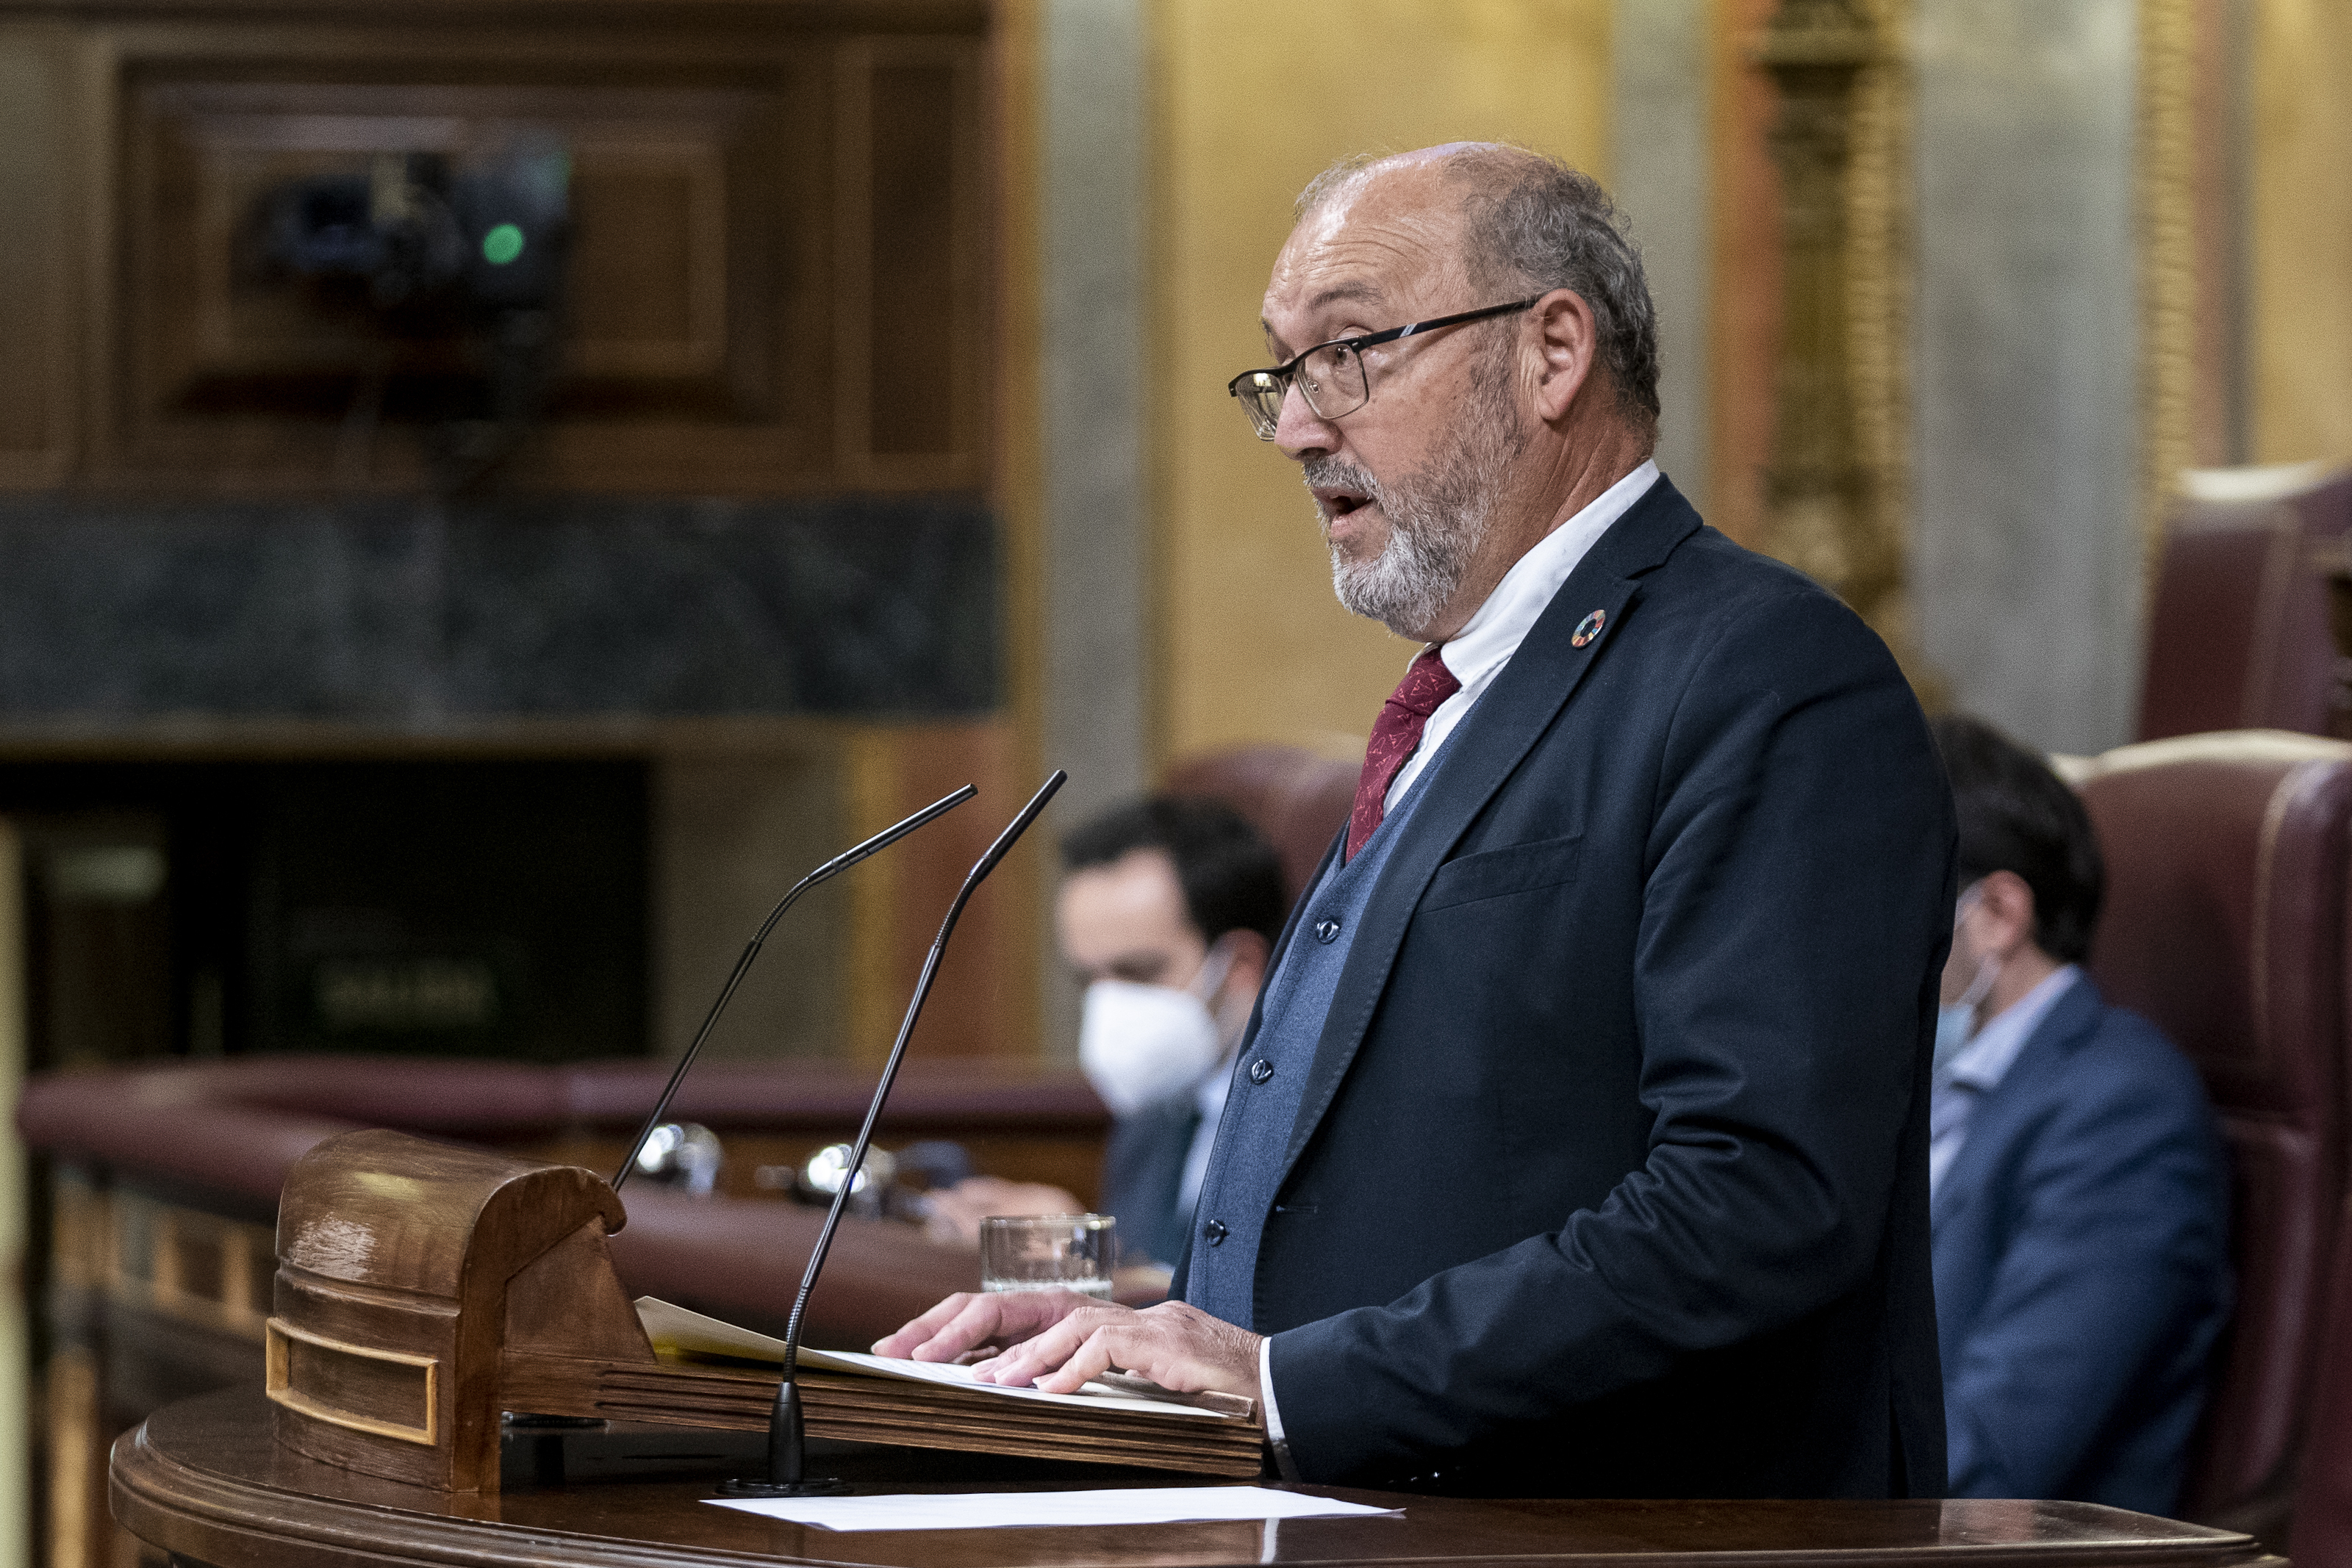 The PSOE deputy, Juan Bernardo Fuentes, intervenes in the Congress of Deputies, on January 25, 2022, in Madrid.